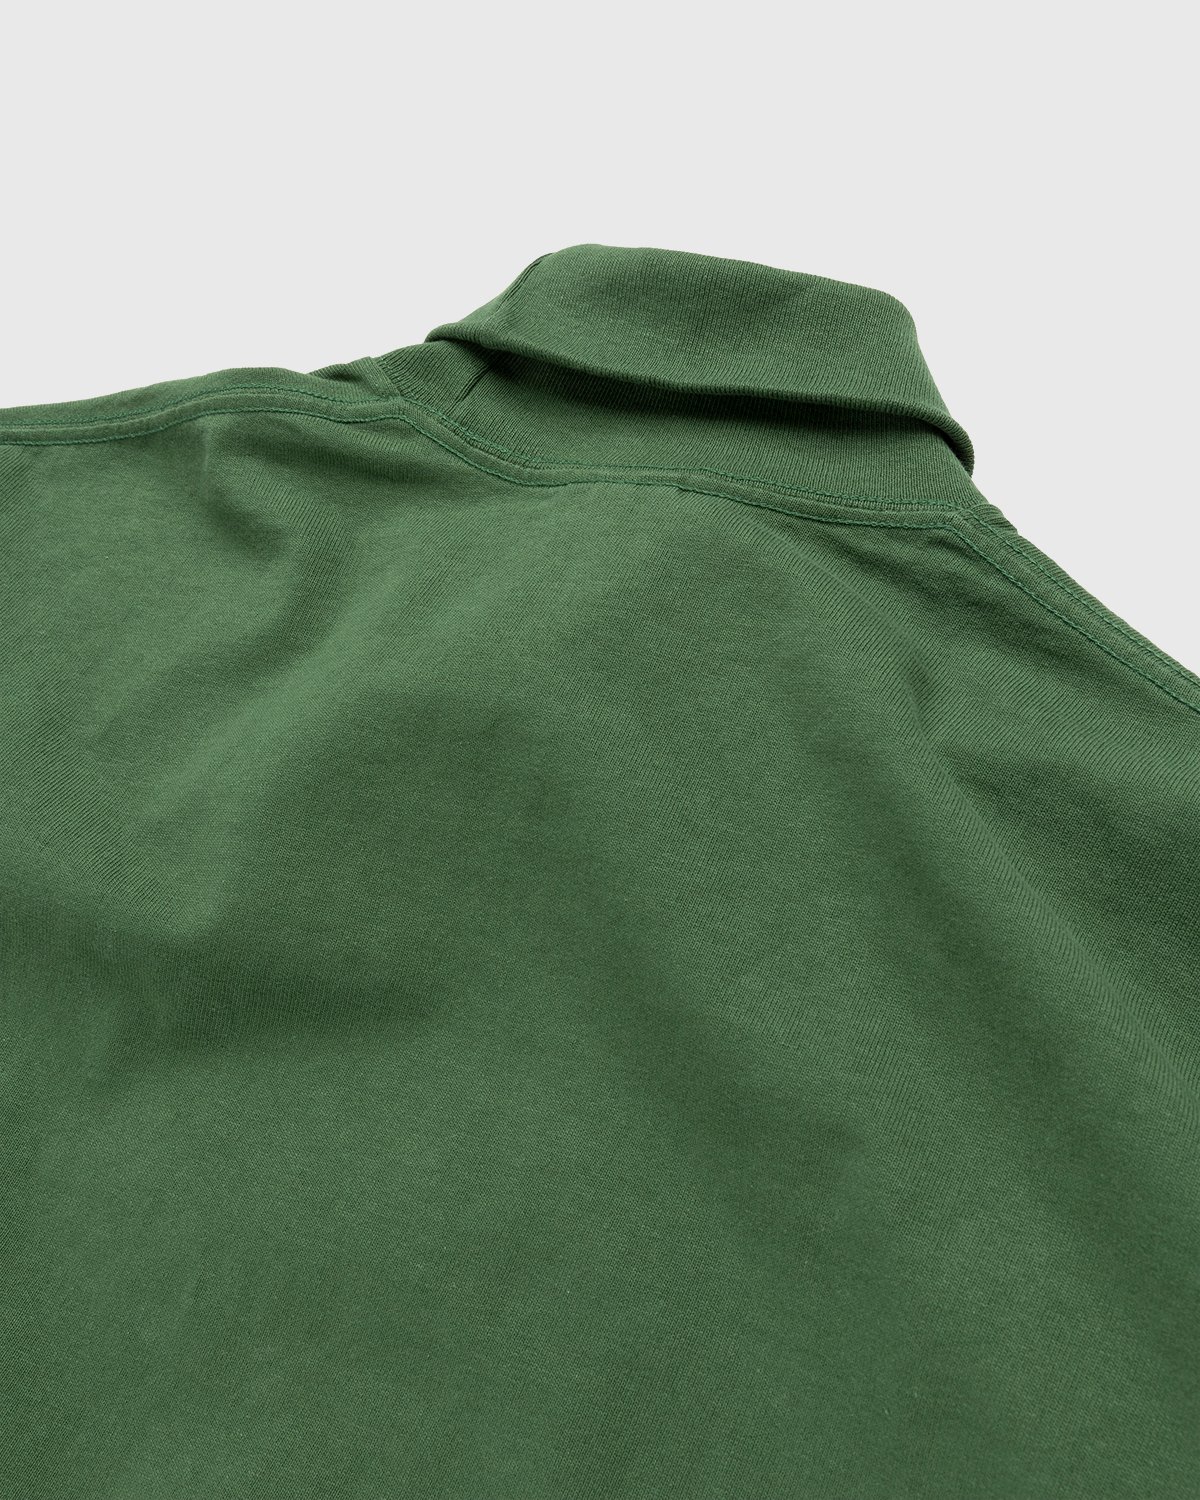 Highsnobiety - Heavy Staples Turtleneck Green - Clothing - Green - Image 3